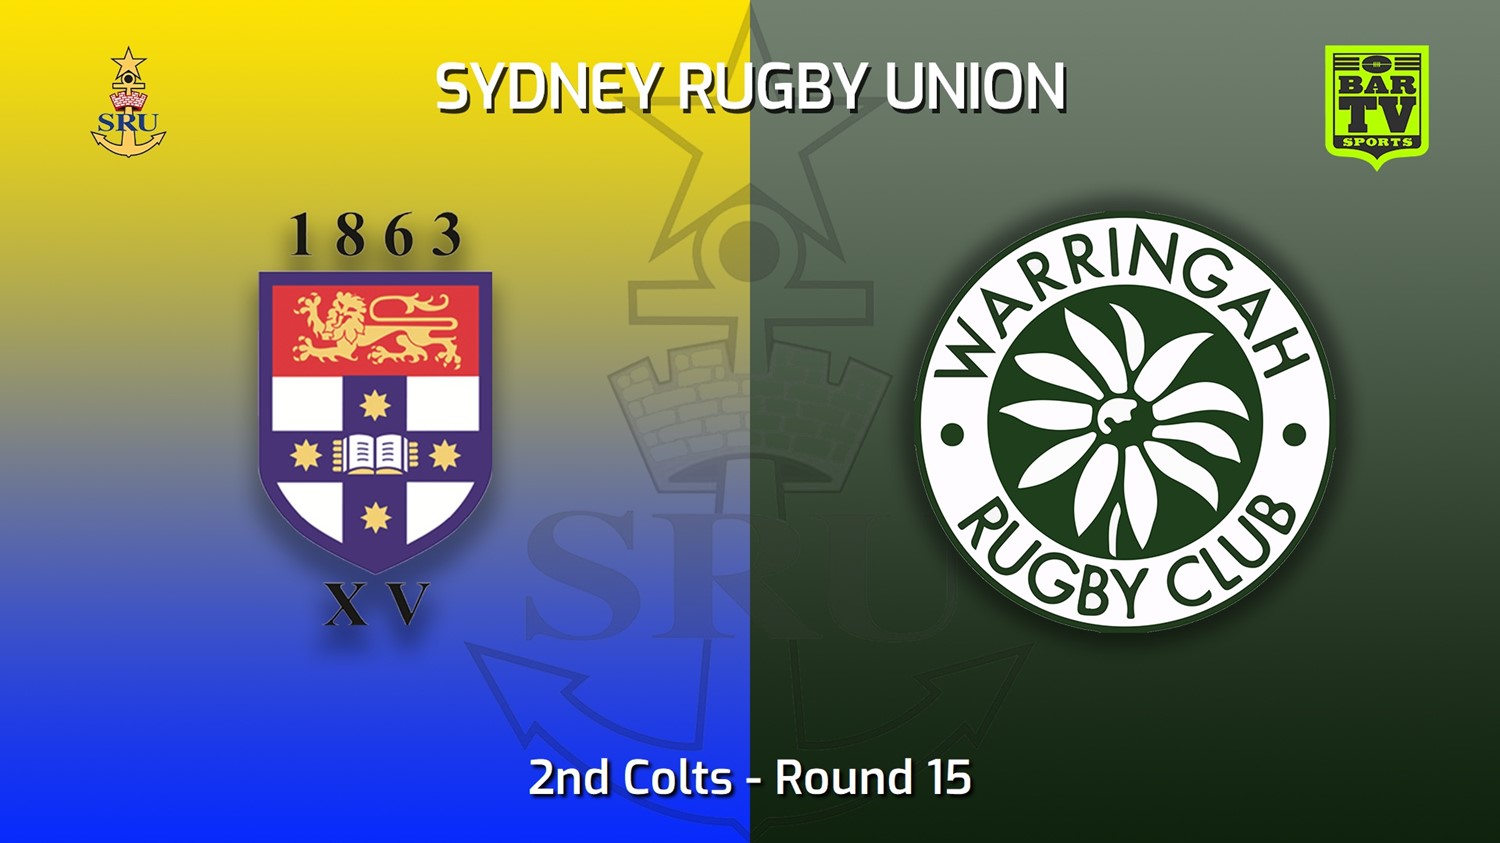 220716-Sydney Rugby Union Round 15 - 2nd Colts - Sydney University v Warringah Slate Image